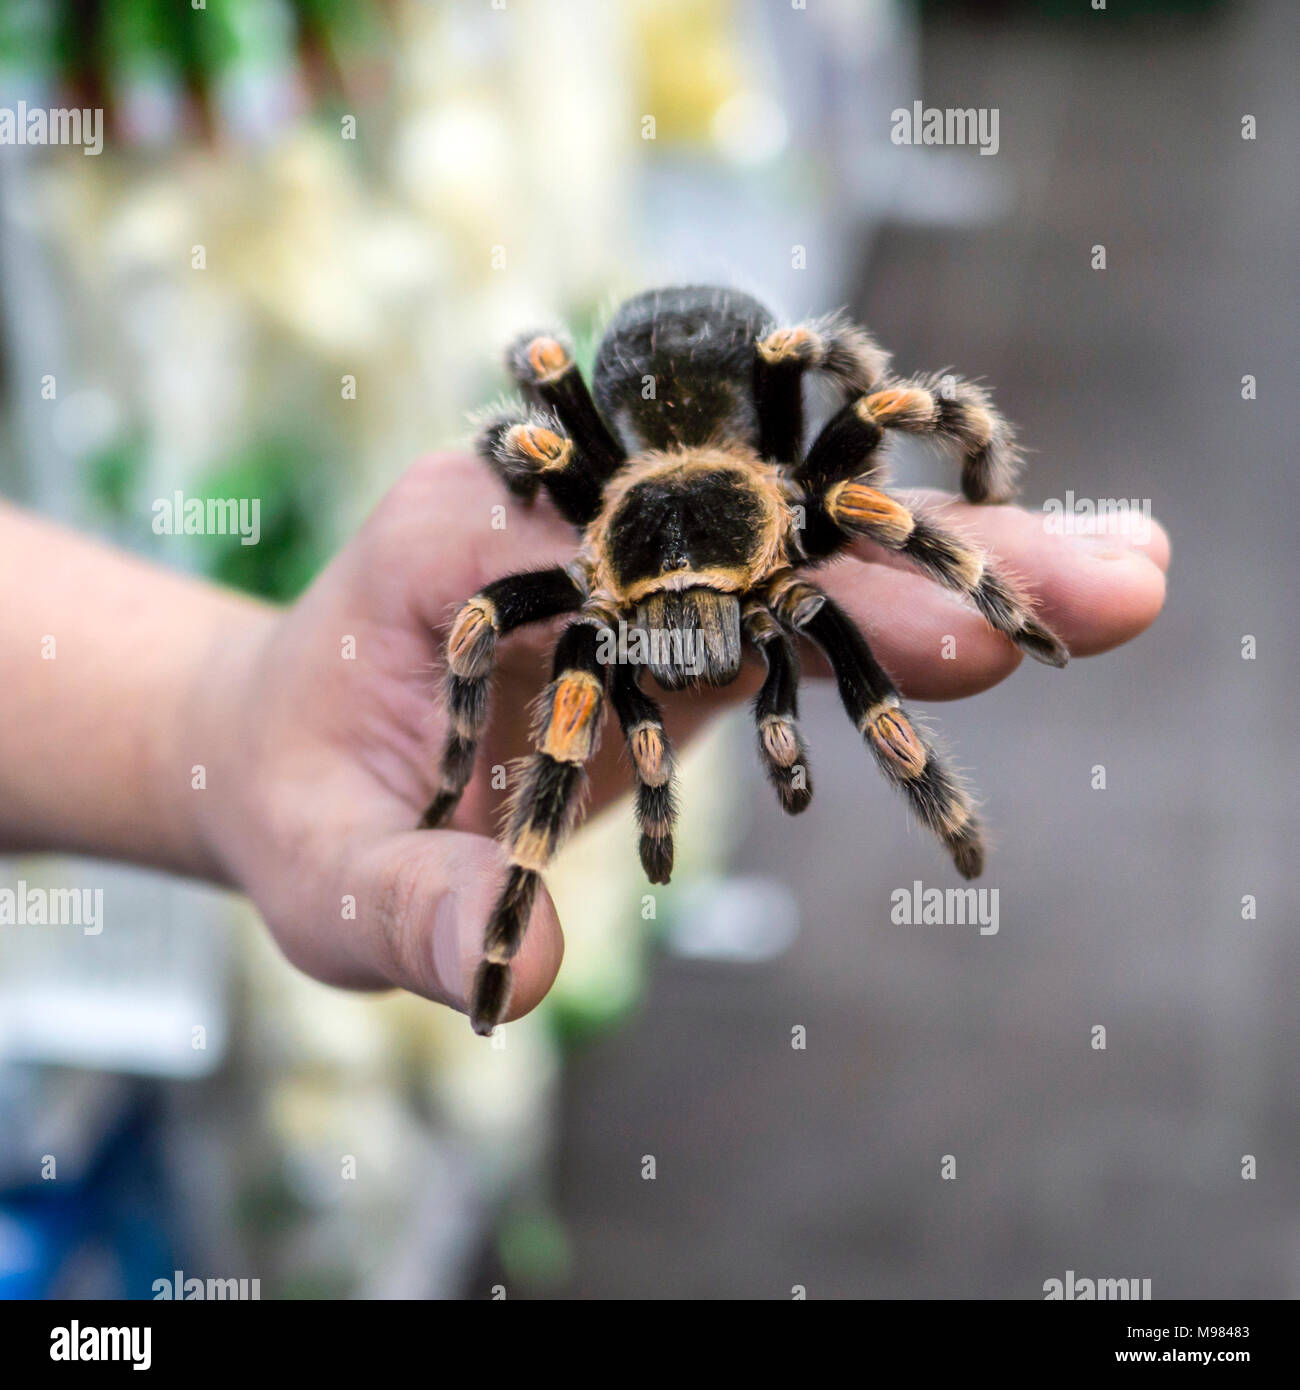 big spider tarantula sits crawling on the man's arm Stock Photo